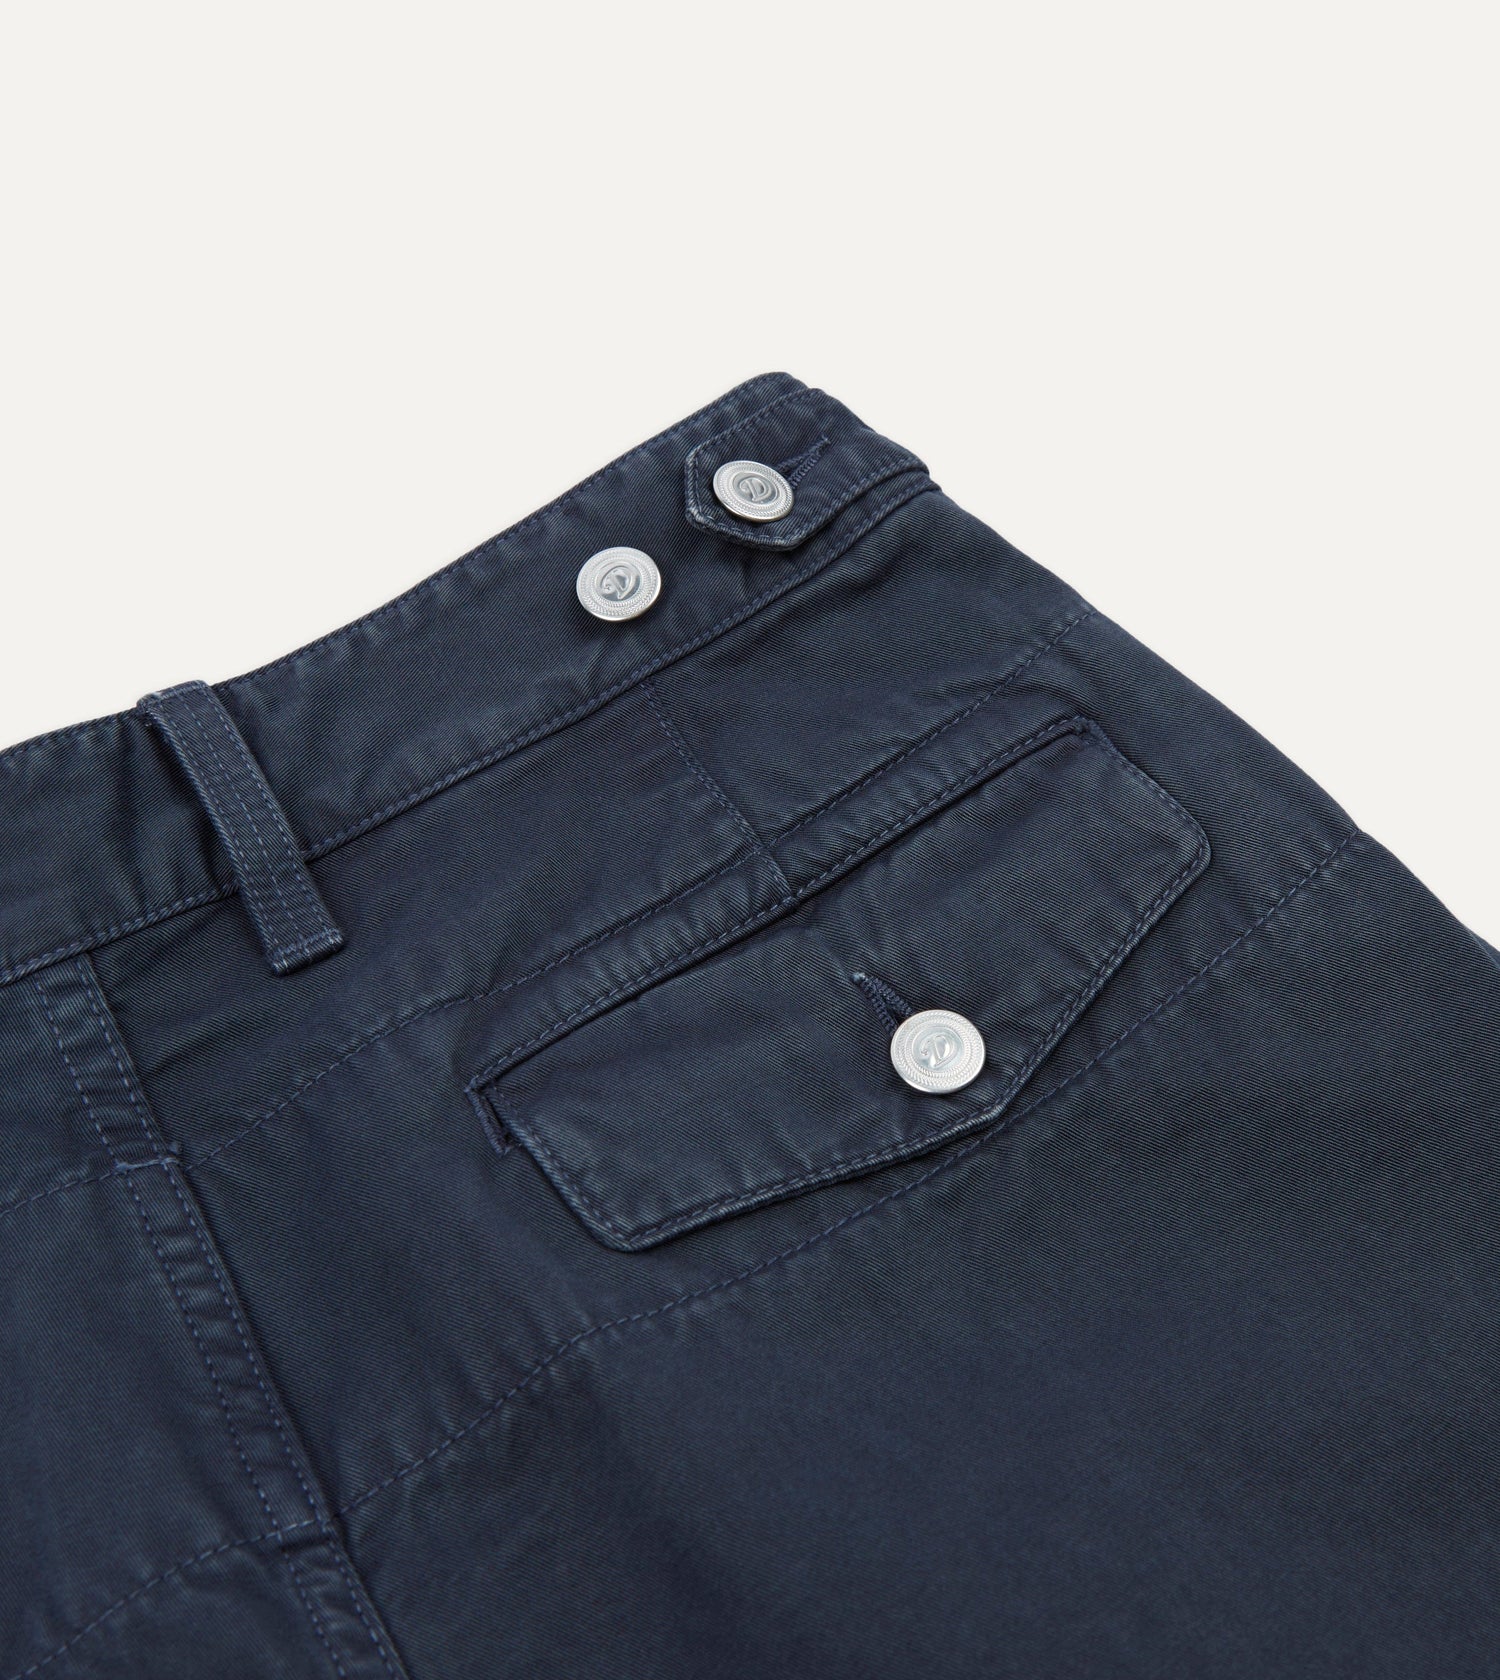 Washed Navy Cotton Twill Single-Pleat Shorts